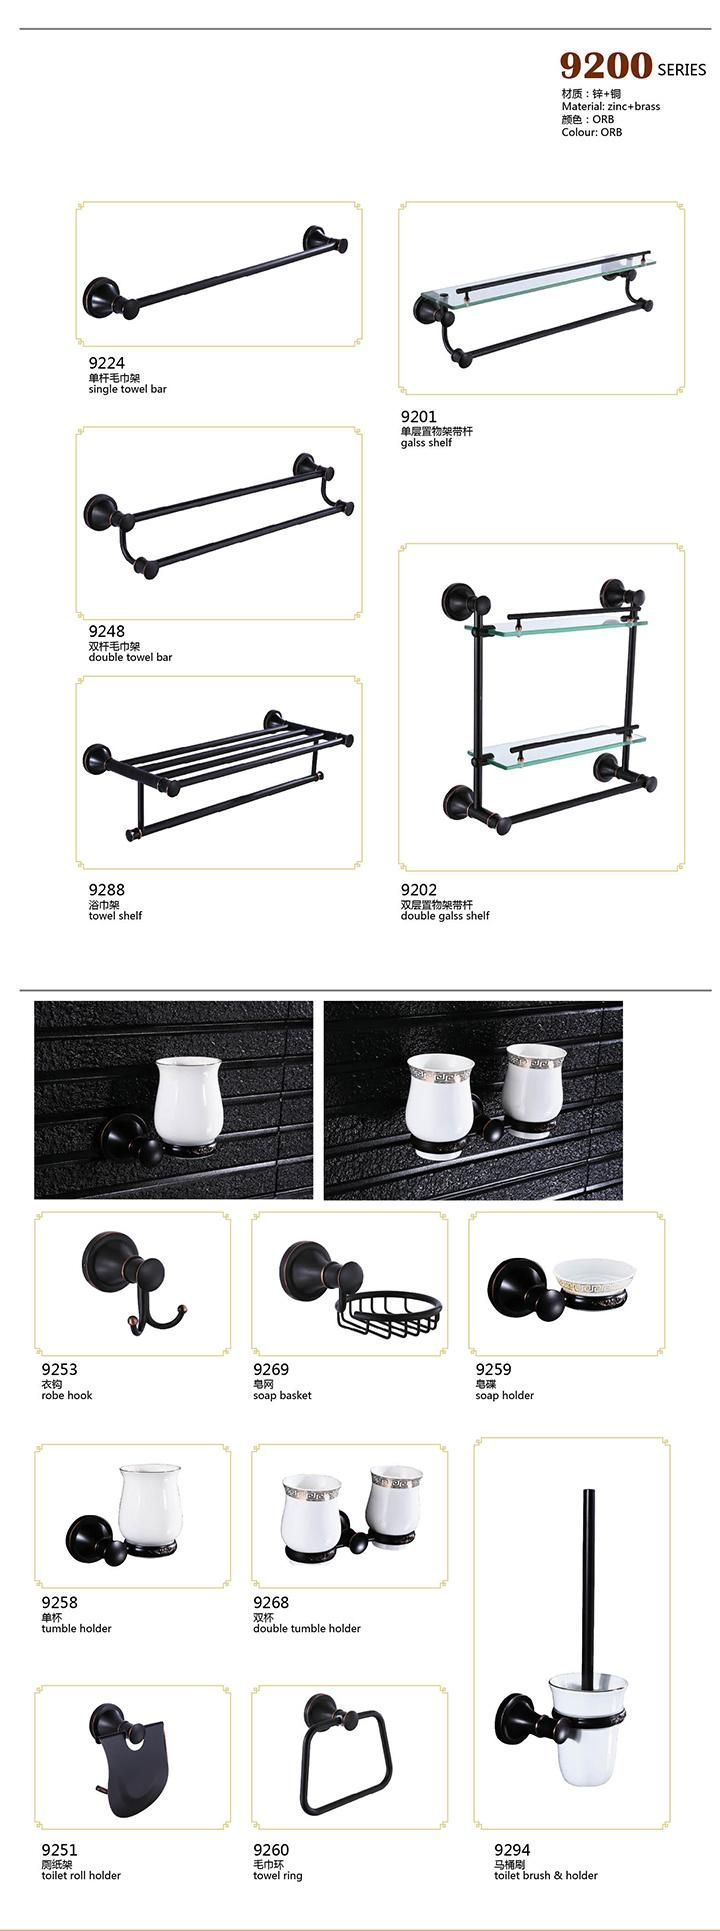 Foshan Bathroom Aluminum Toilet Brush and Holder Set 6600 Series